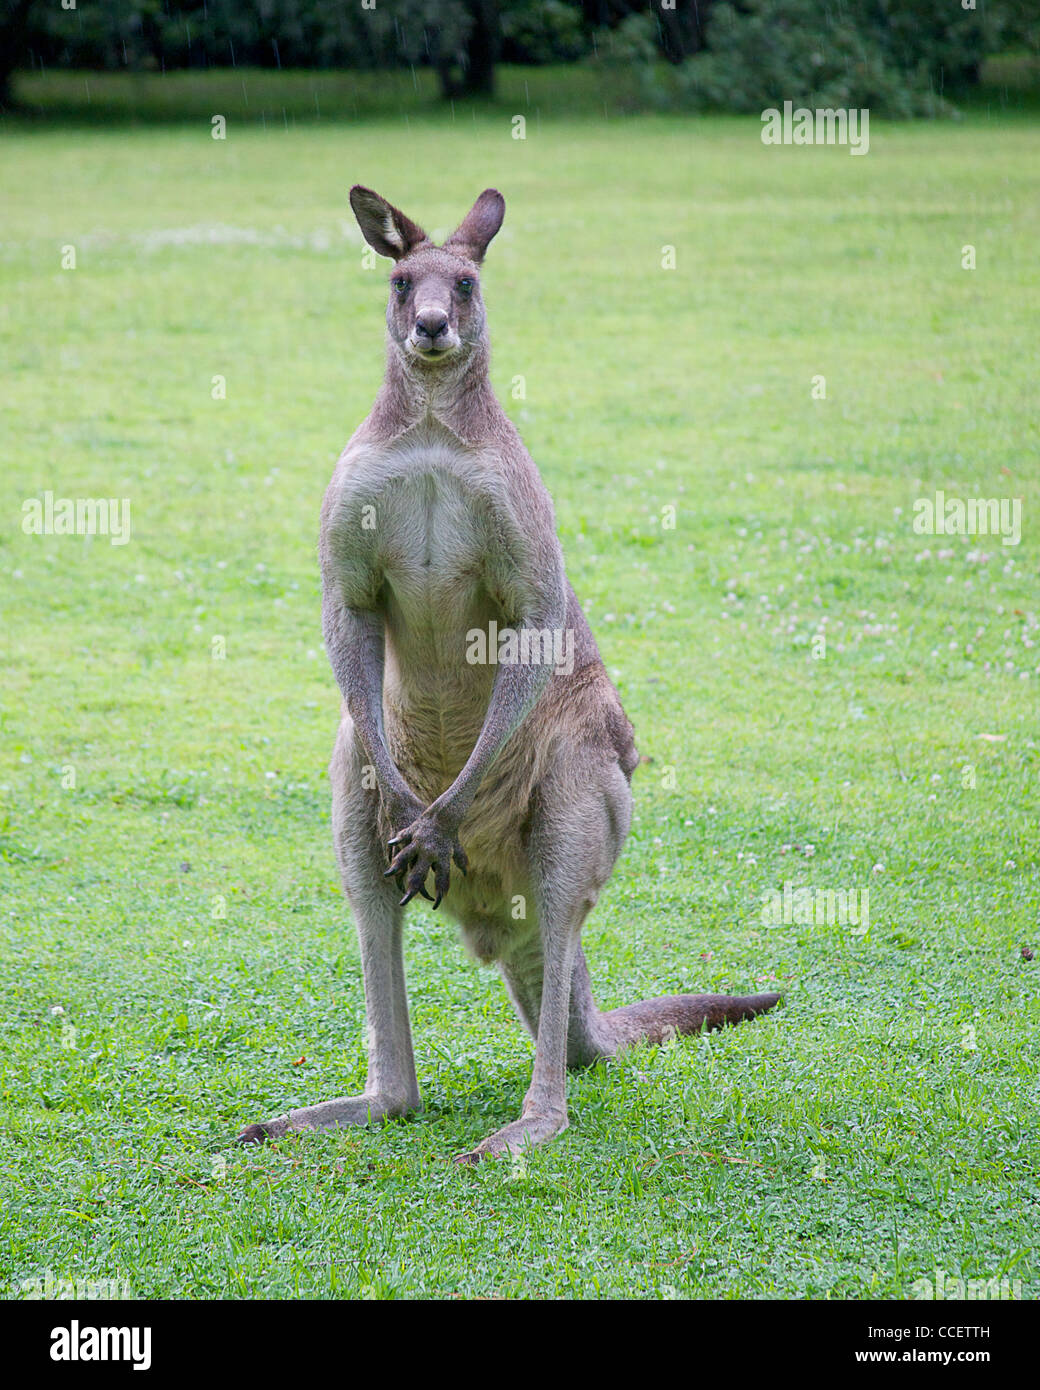 male kangaroo standing on grass Stock Photo